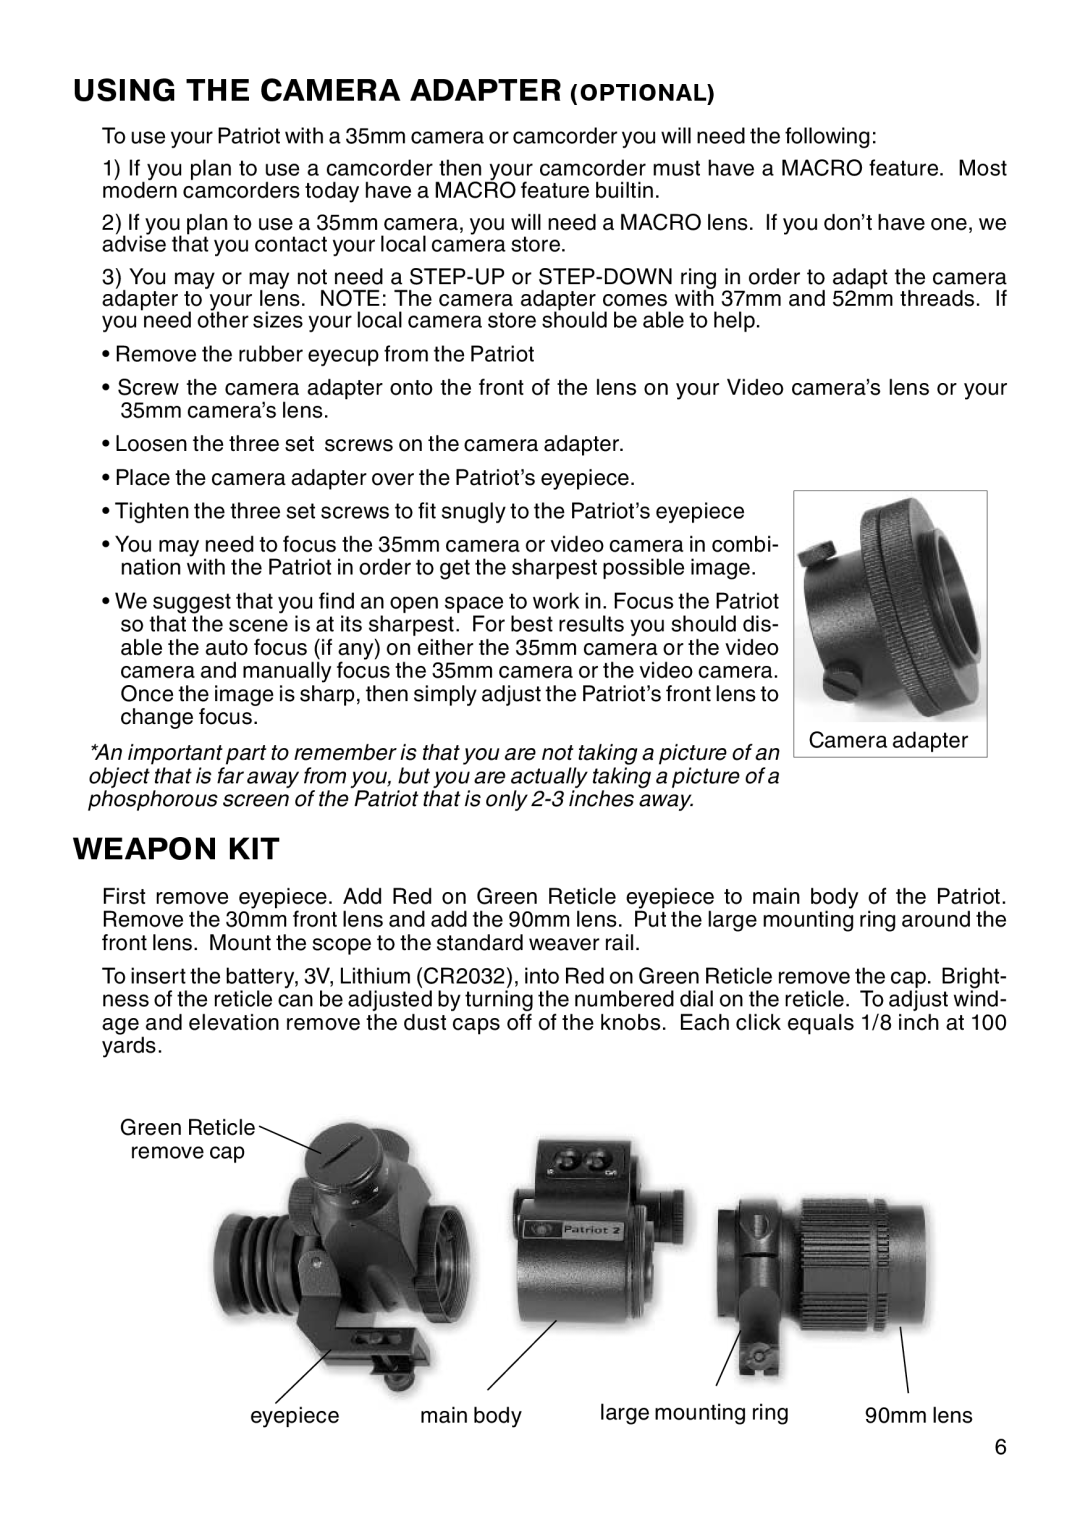 ATN Night Patriot manual Using The Camera Adapter Optional, Weapon Kit 